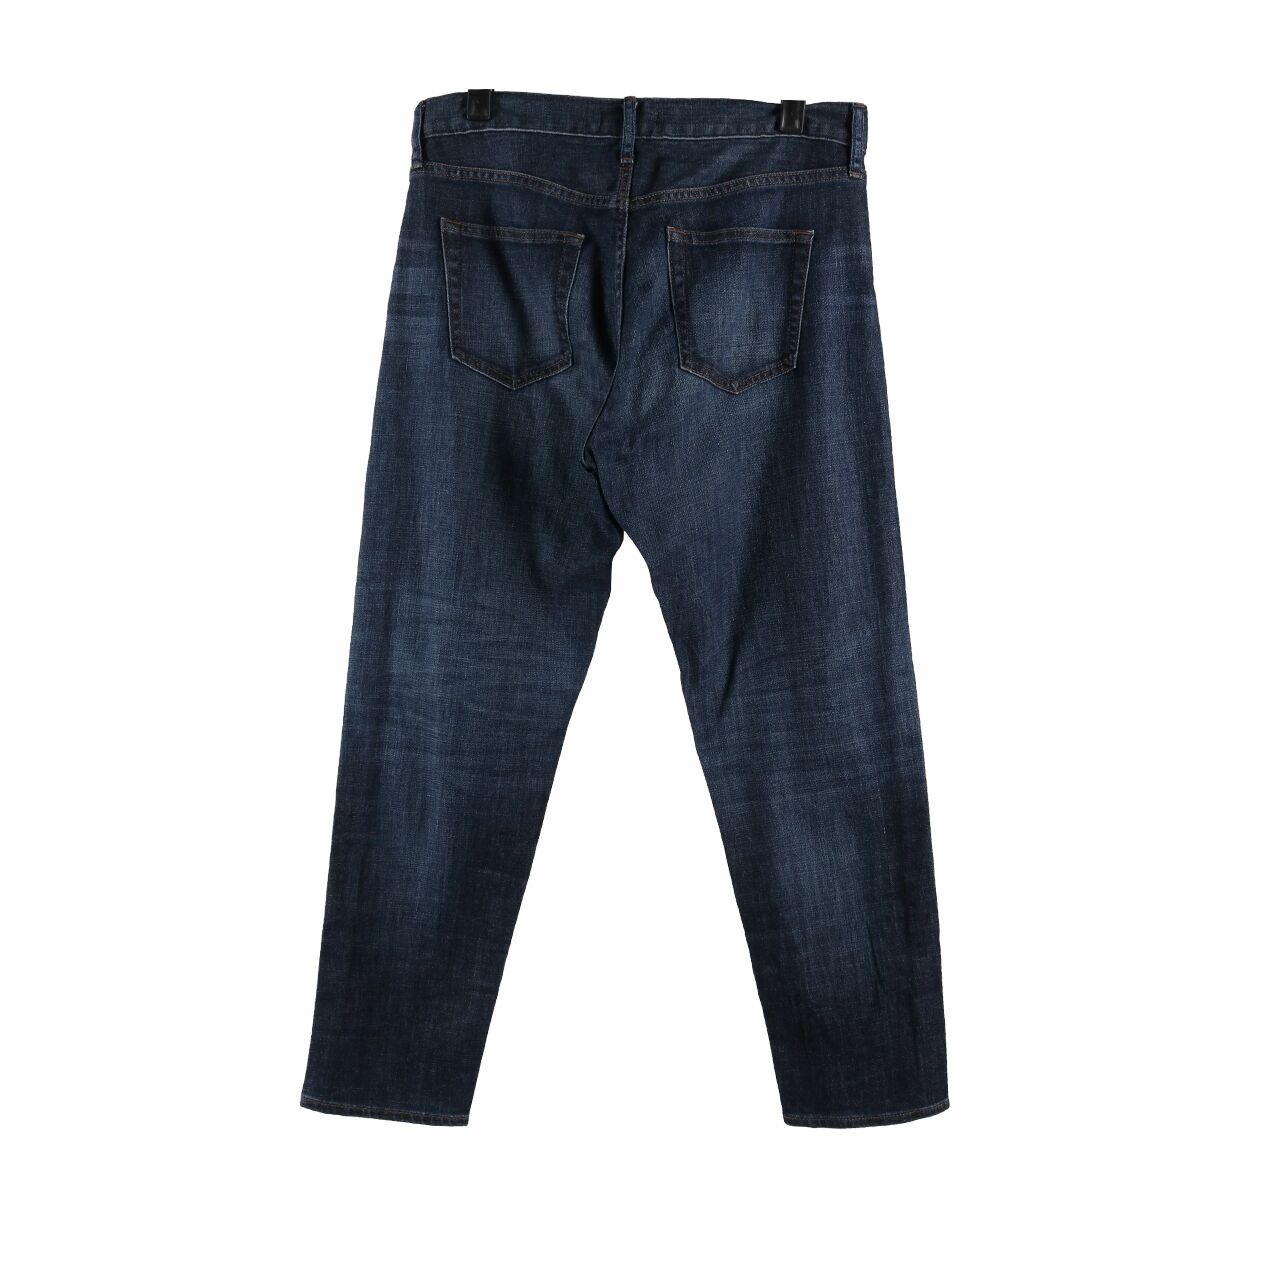 UNIQLO Dark Blue Jeans Long Pants